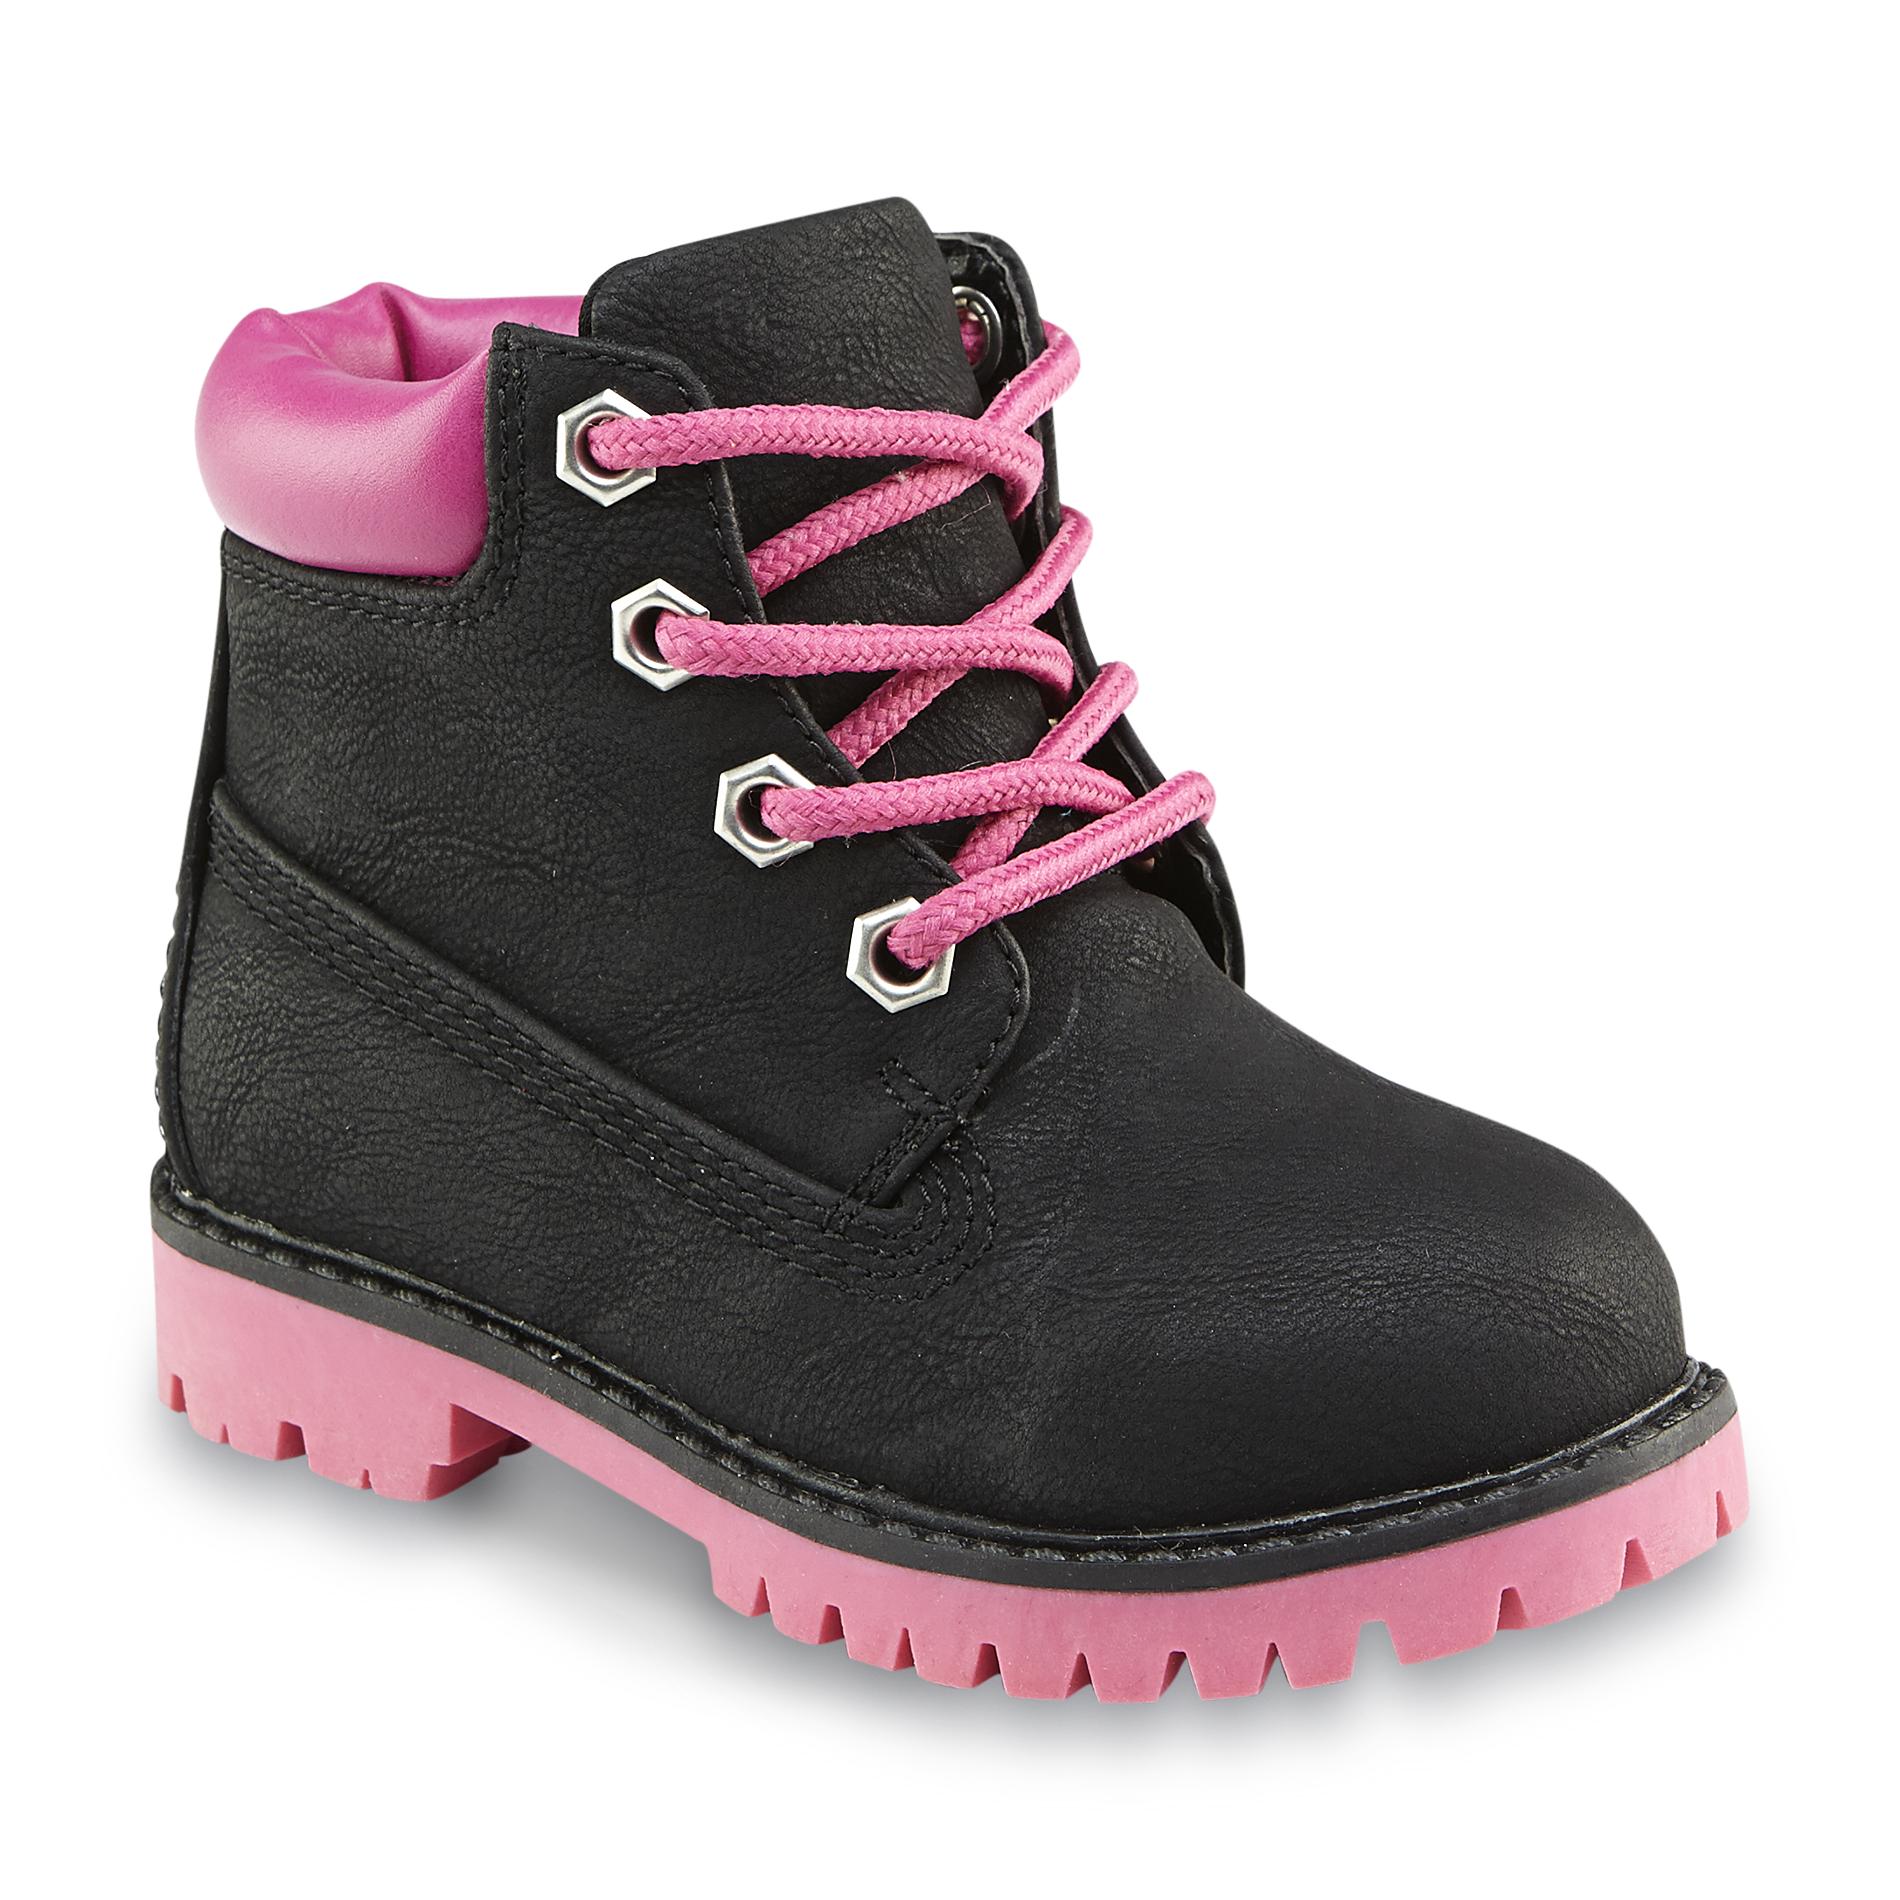 Yokids Toddler Girl's Hike Black/Pink Ankle Boot